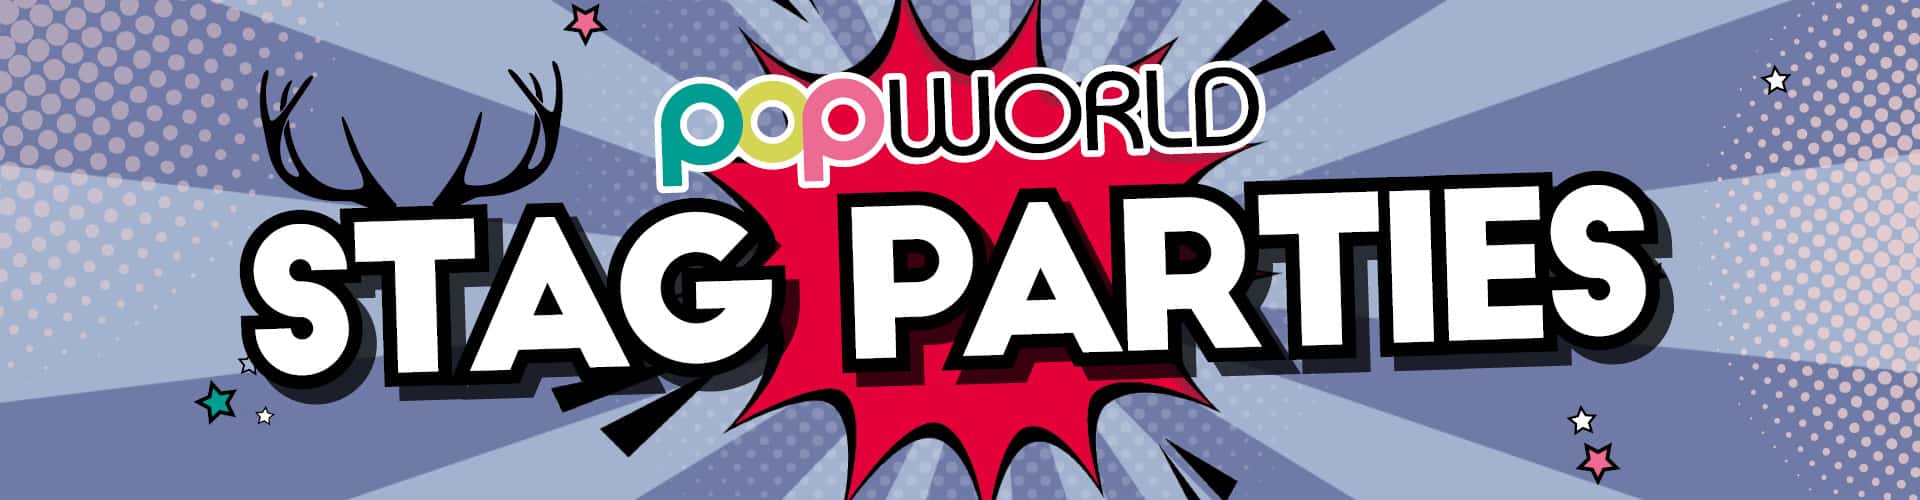 Stag Parties at Popworld Birmingham